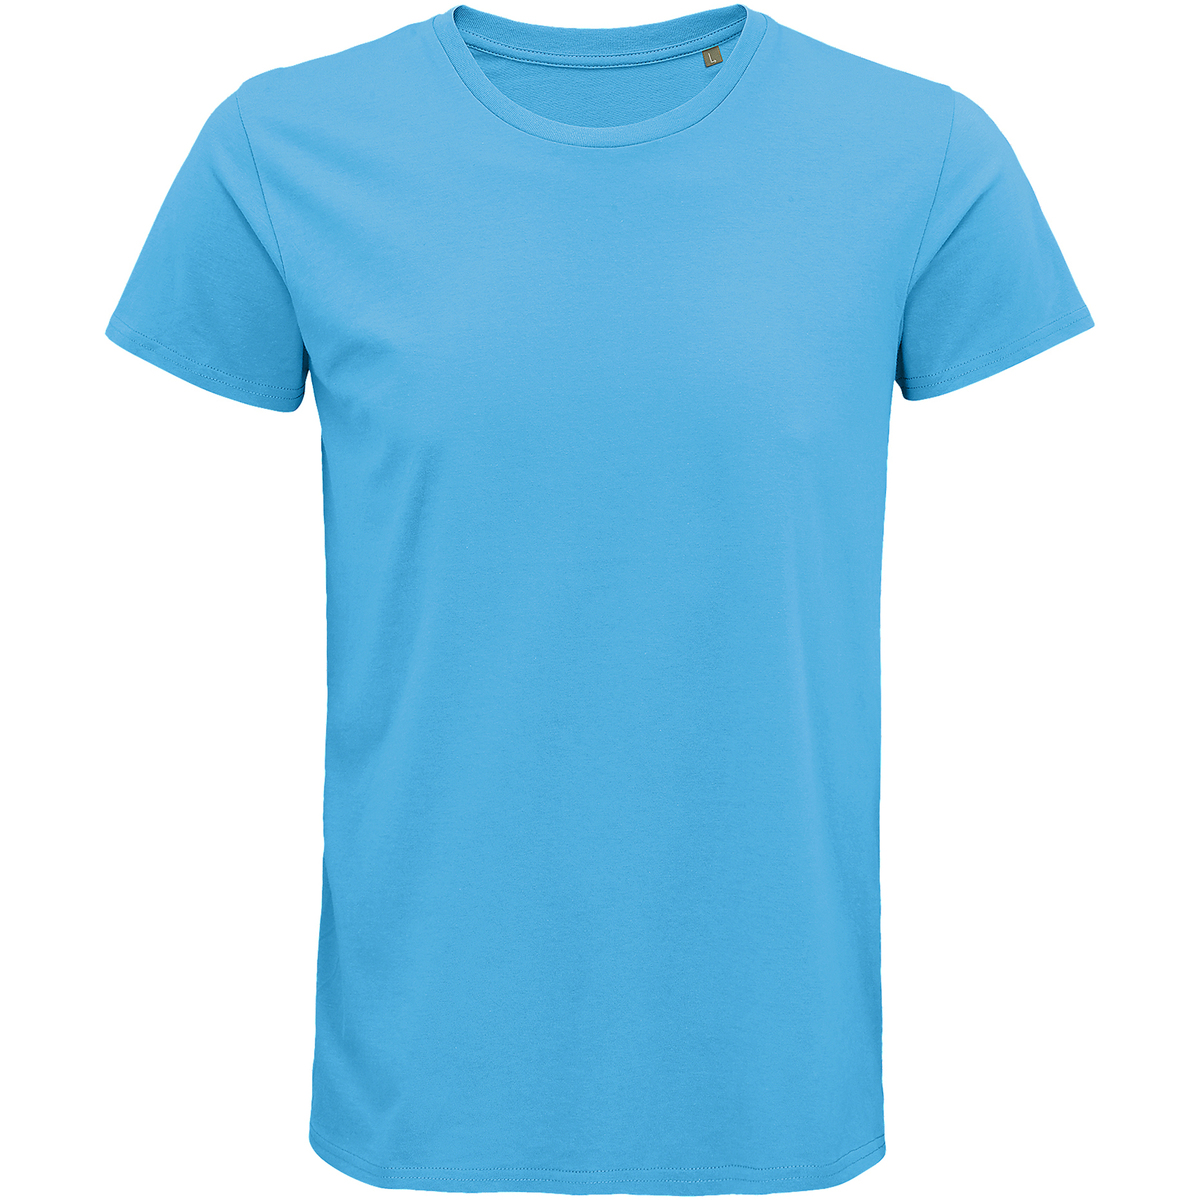 Vêtements Homme T-shirts manches longues Sols Crusader Bleu